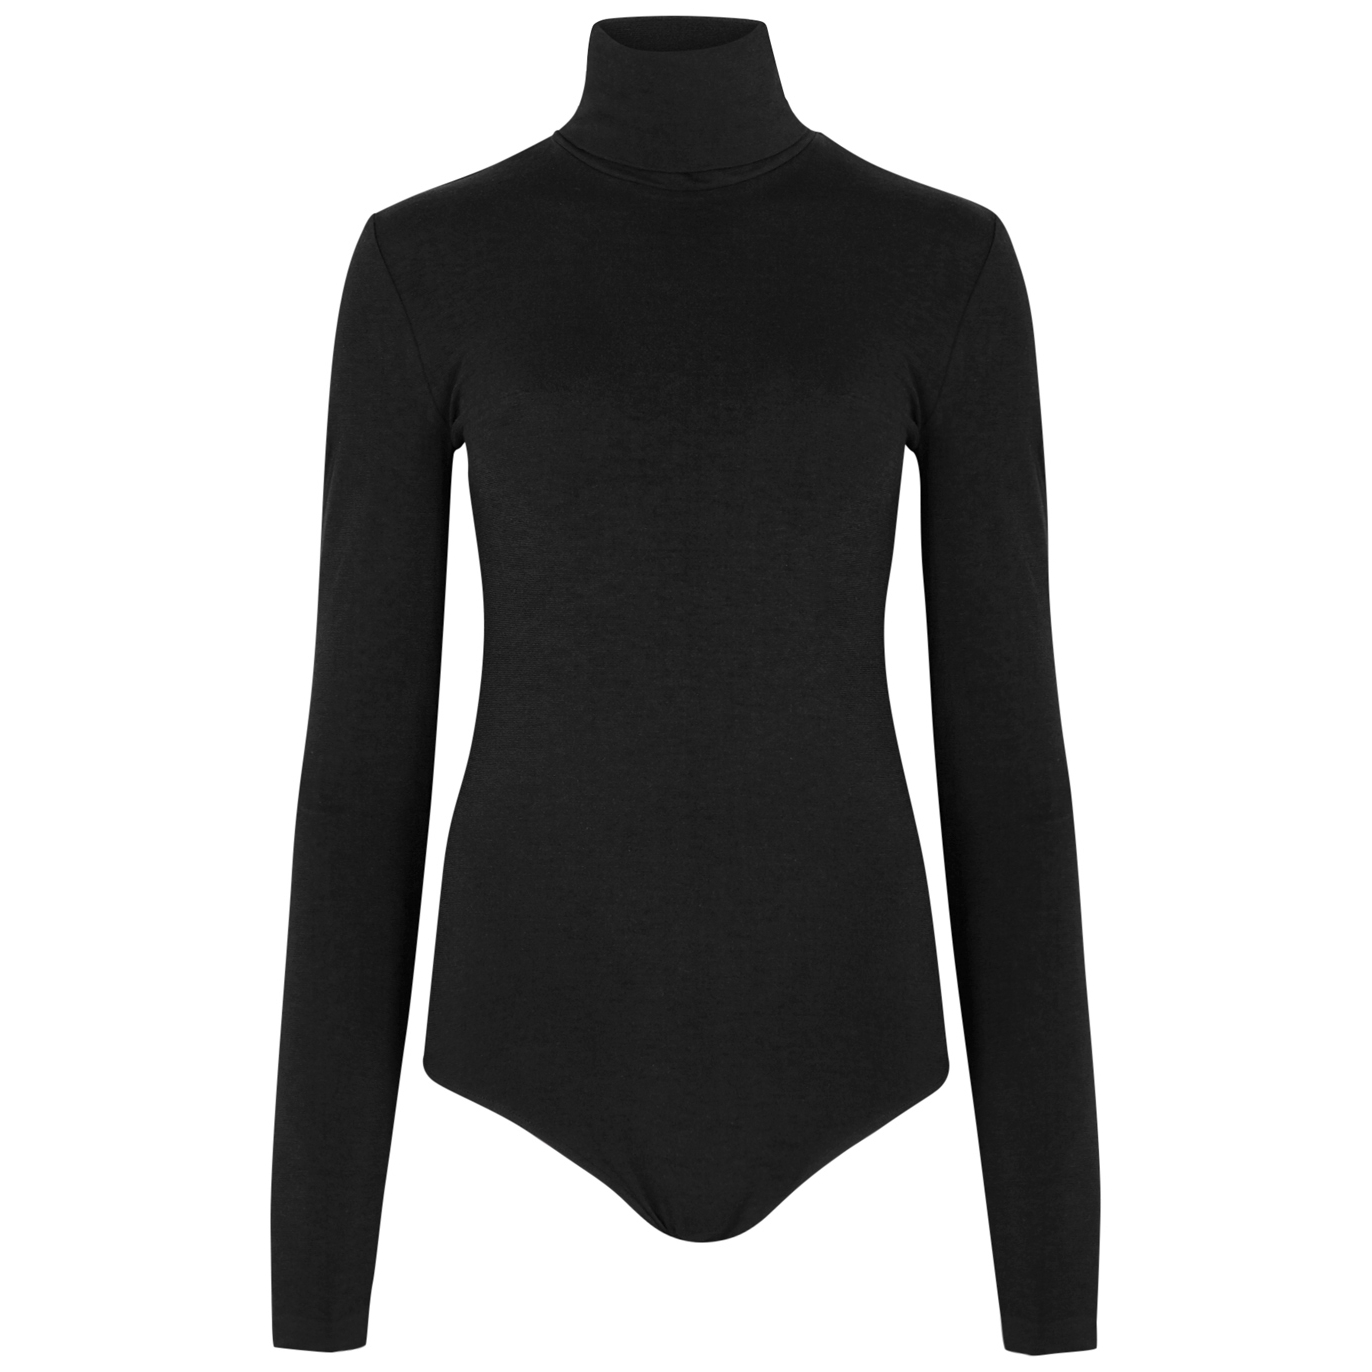 Wolford Colorado Black Stretch-knit Bodysuit - M